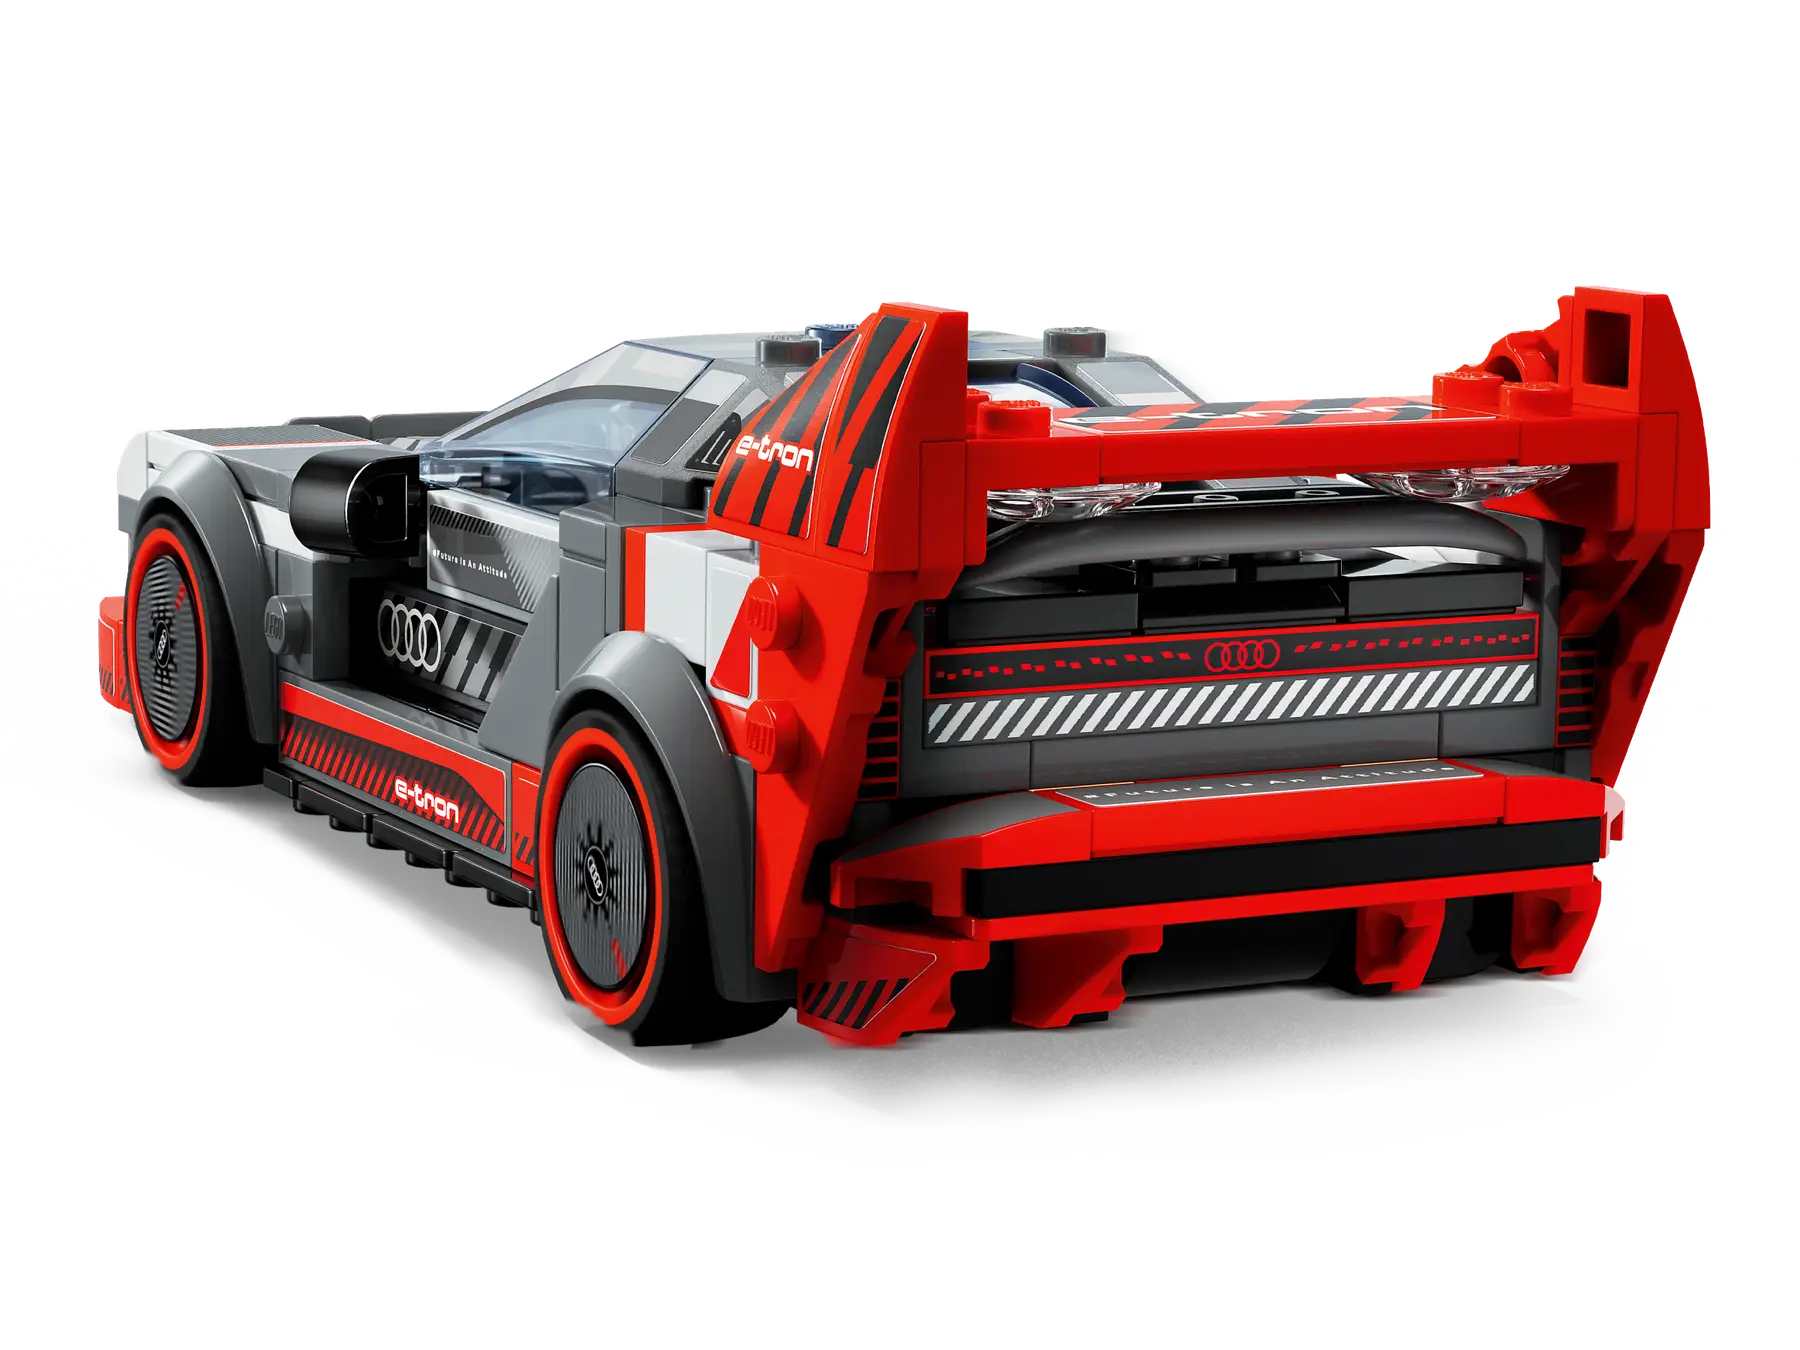 LEGO Speed Champions Audi S1 e-tron quattro Yarış Arabası 76921 - Thumbnail